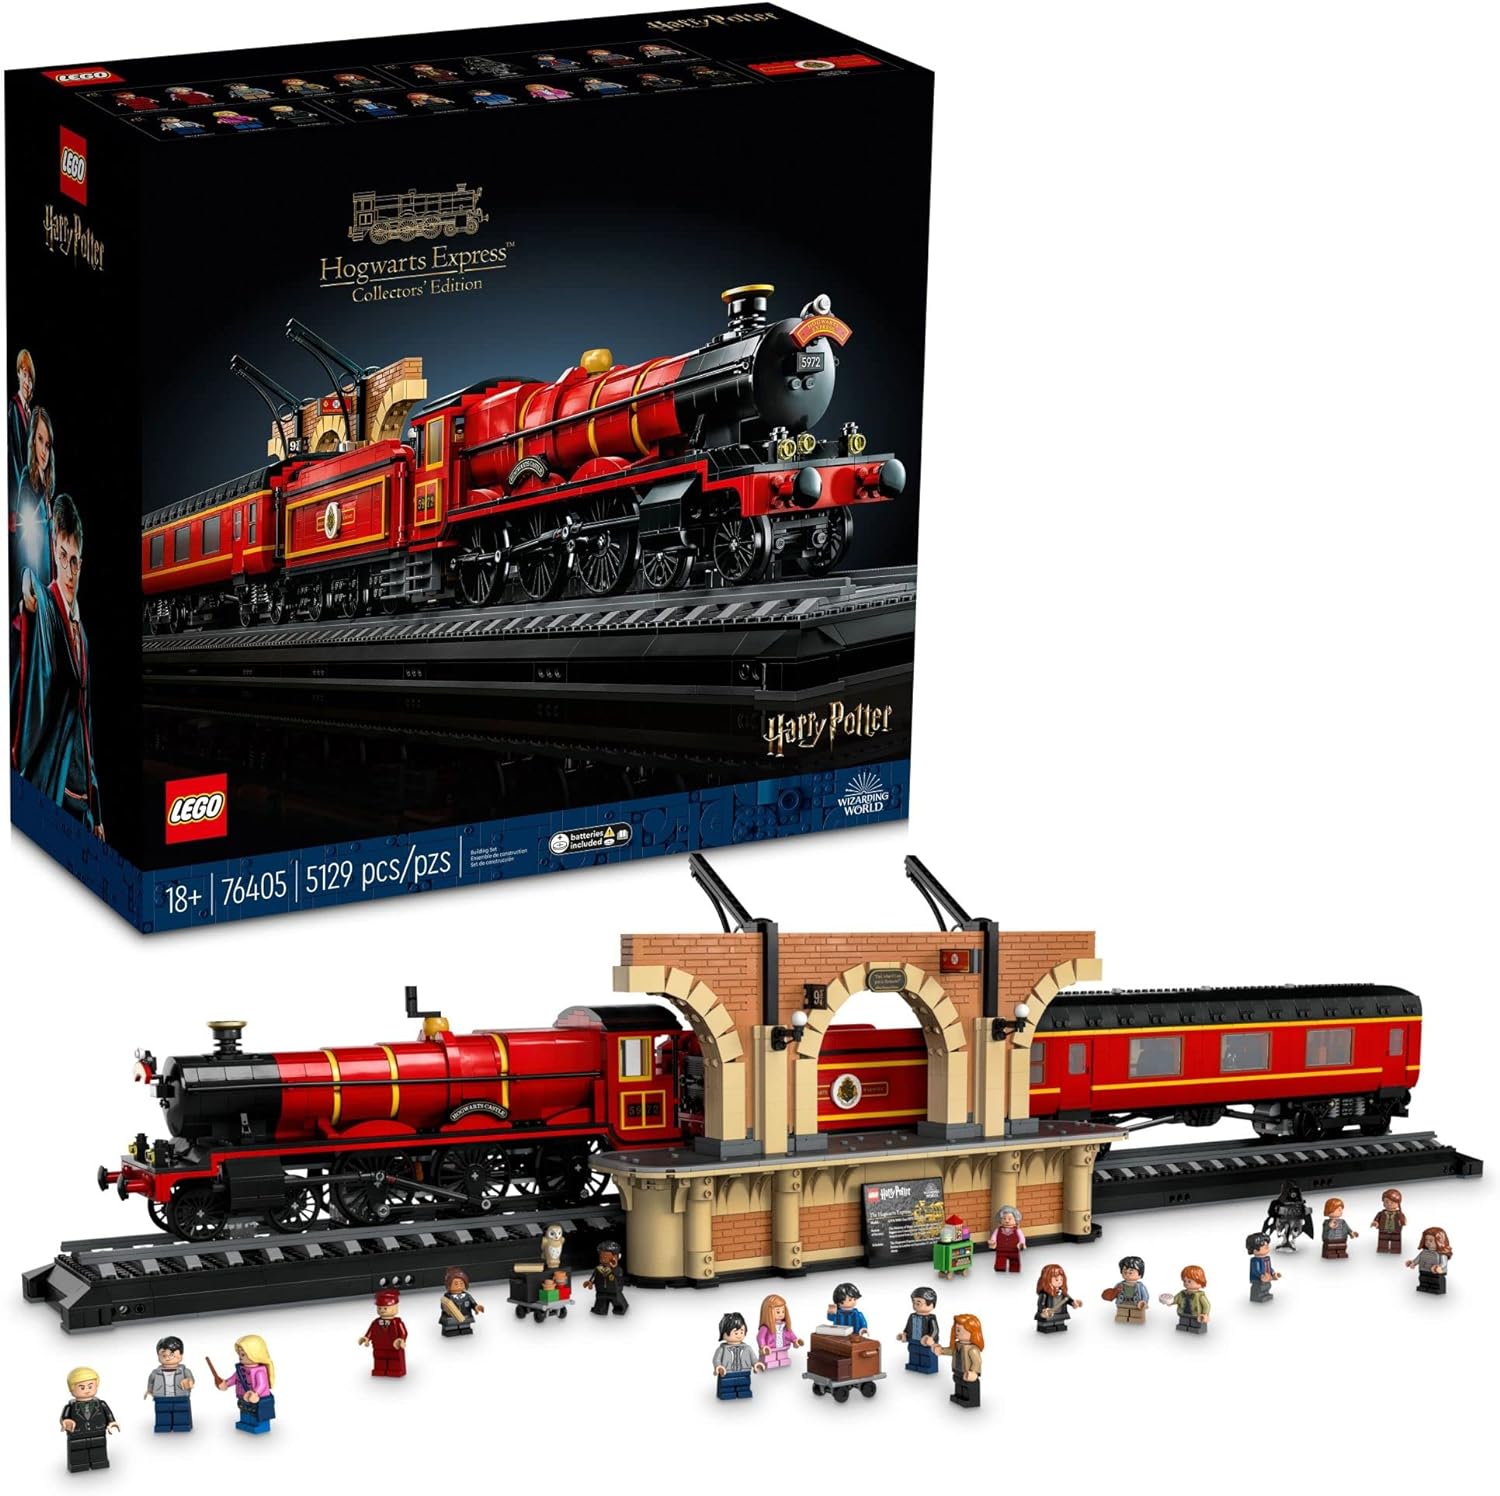 Image: LEGO Harry Potter: Hogwarts Express - 5129 pieces